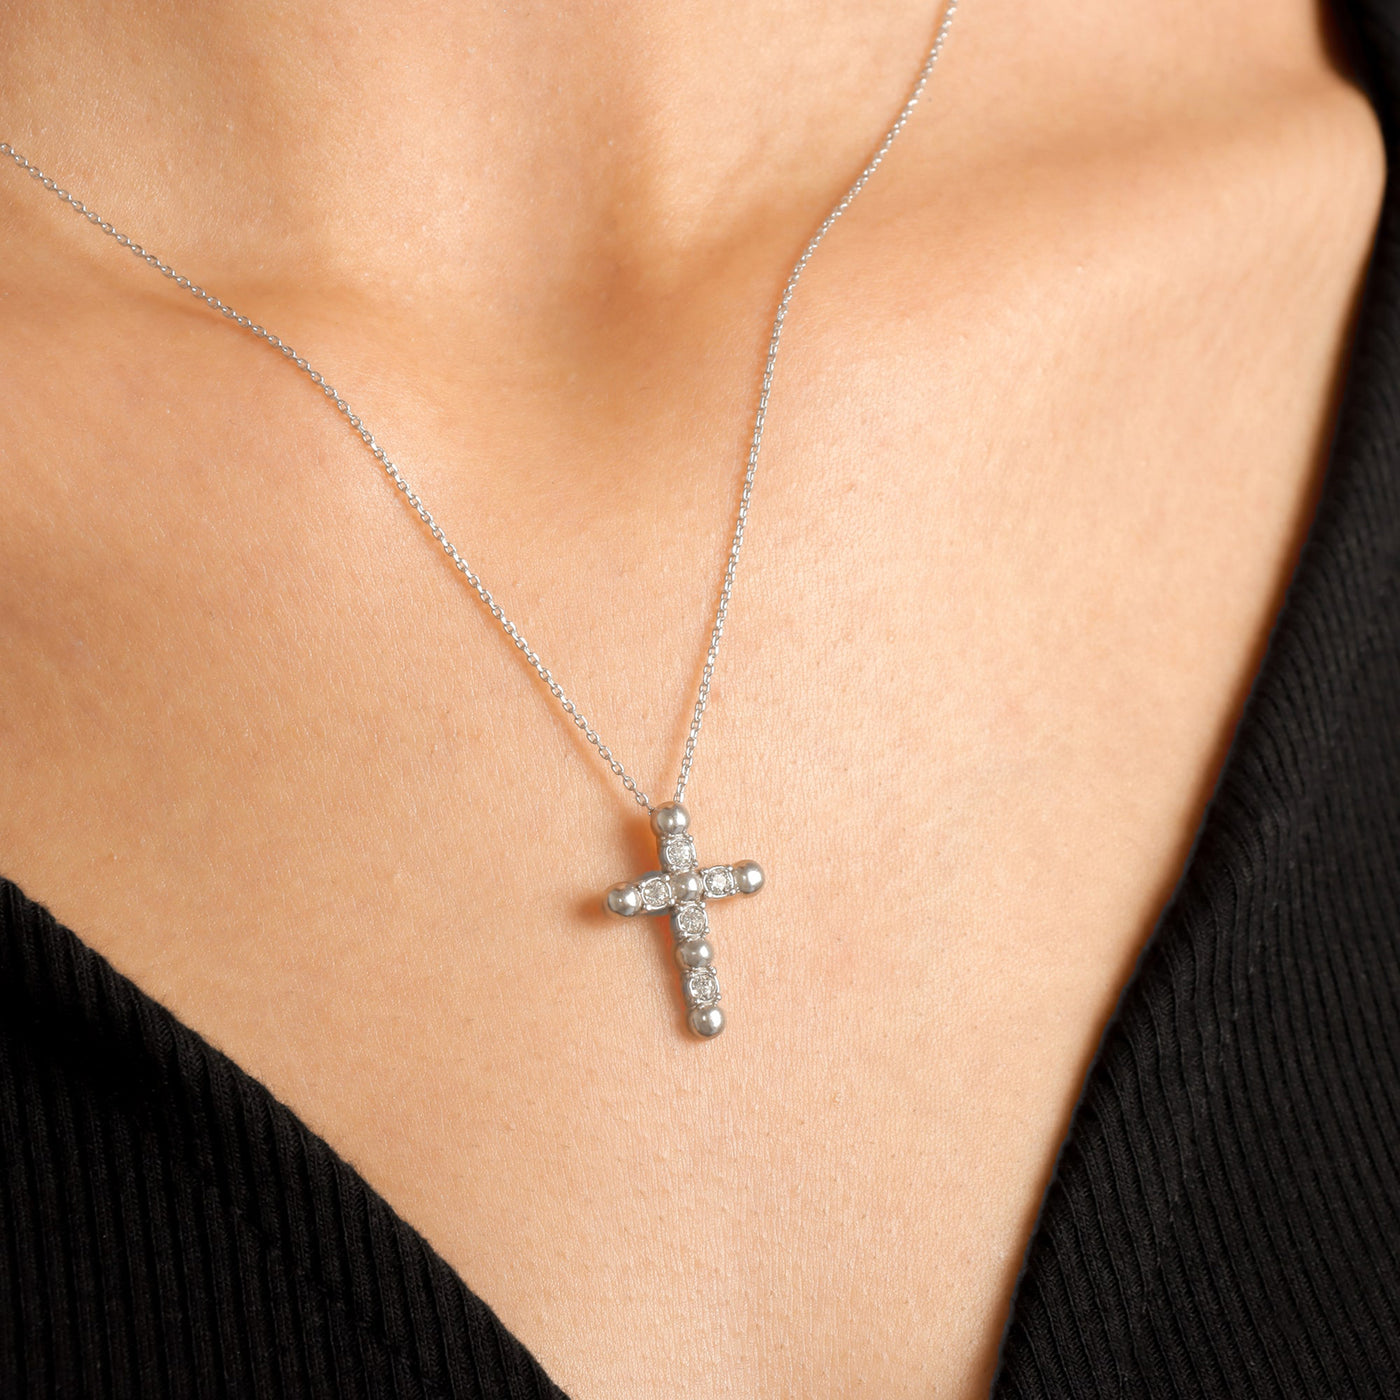 Delicate Crystal Cross Pendant Necklace - Gloria Jewels